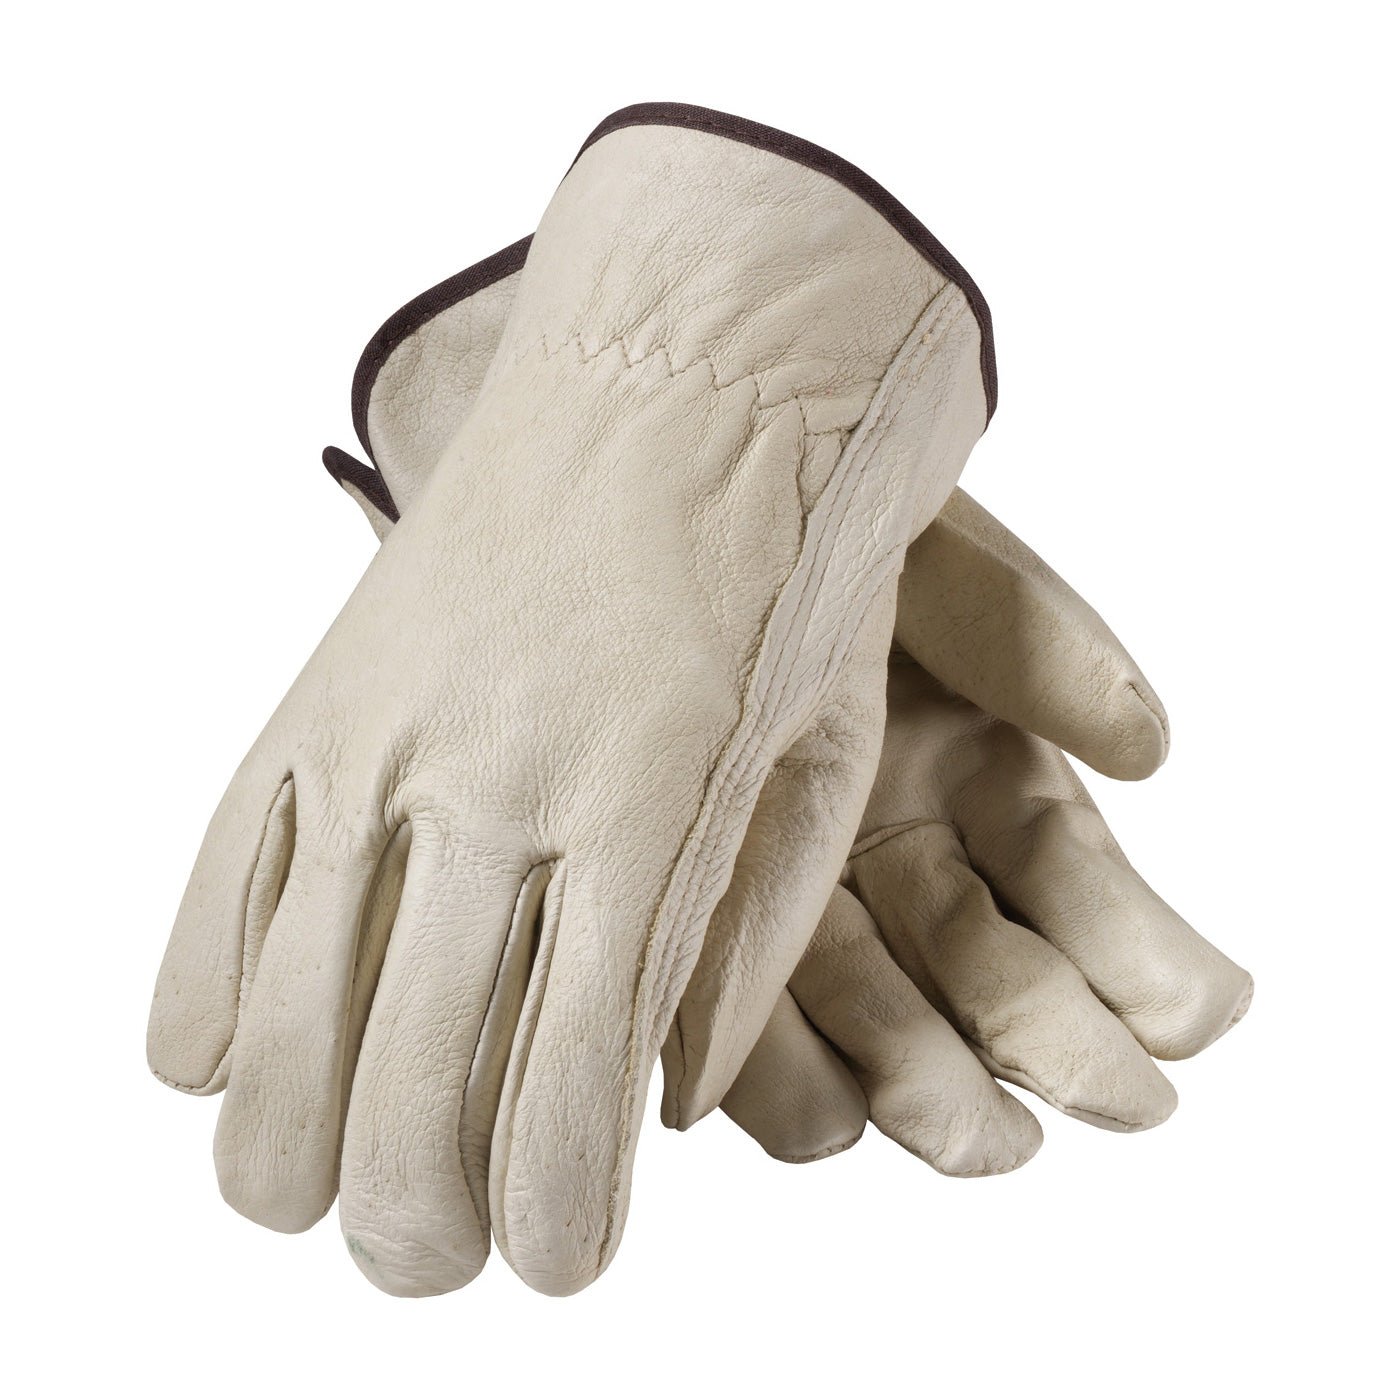 PIP 70-361/M Economy Grade Top Grain Pigskin Leather Drivers Glove - Keystone Thumb